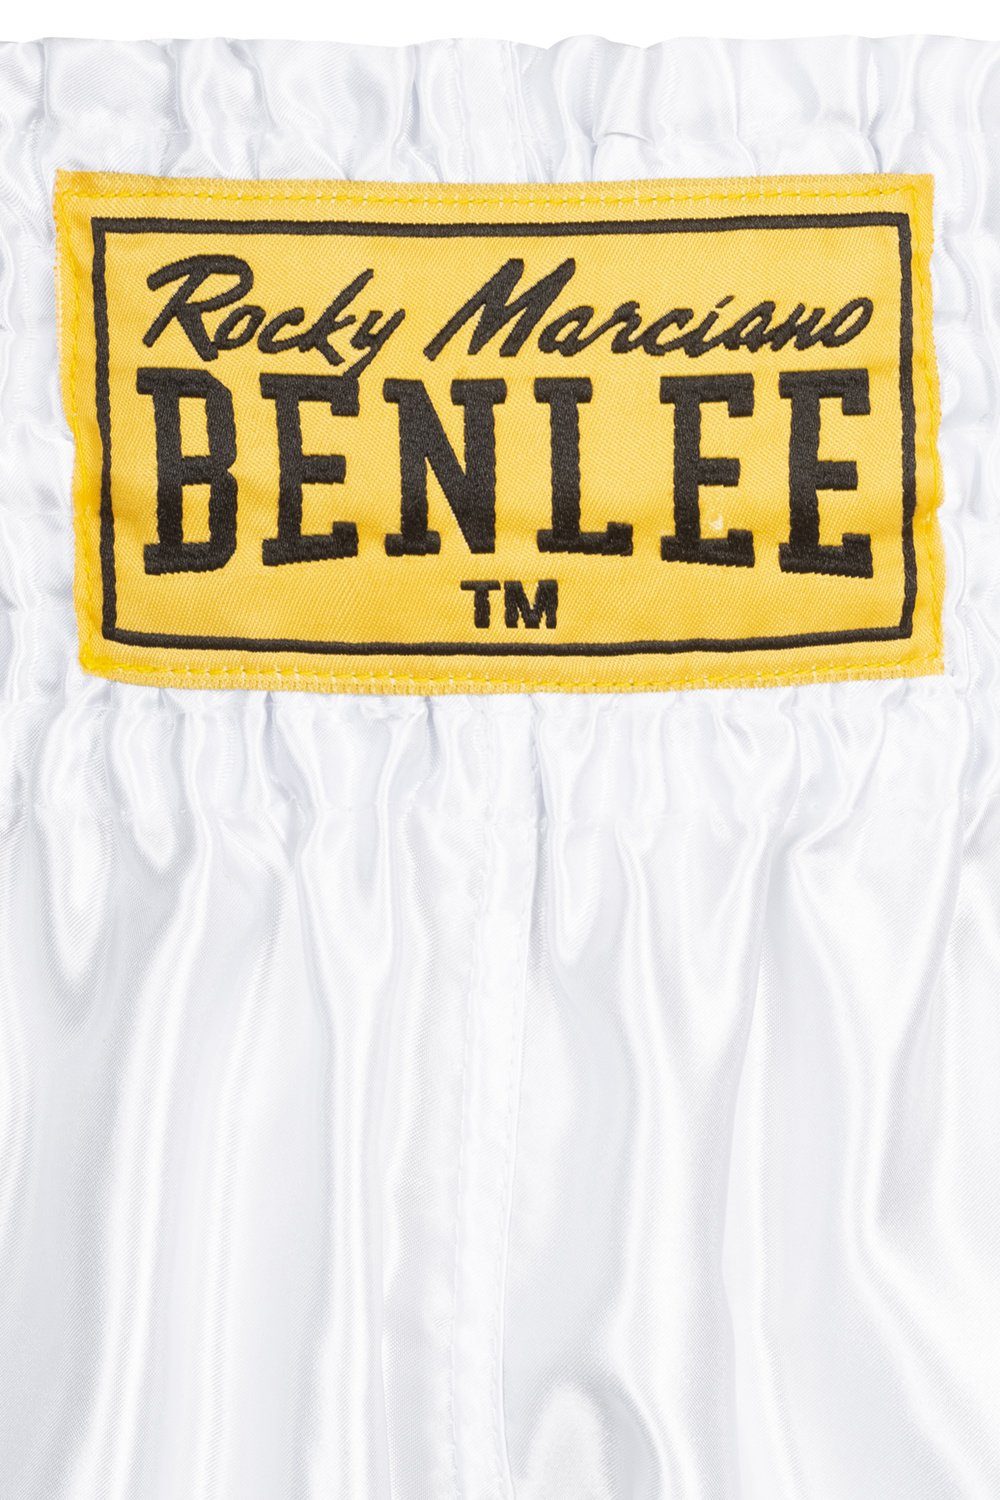 Rocky Marciano Benlee Kampfsporthose white Sporthose Thai Benlee Uni